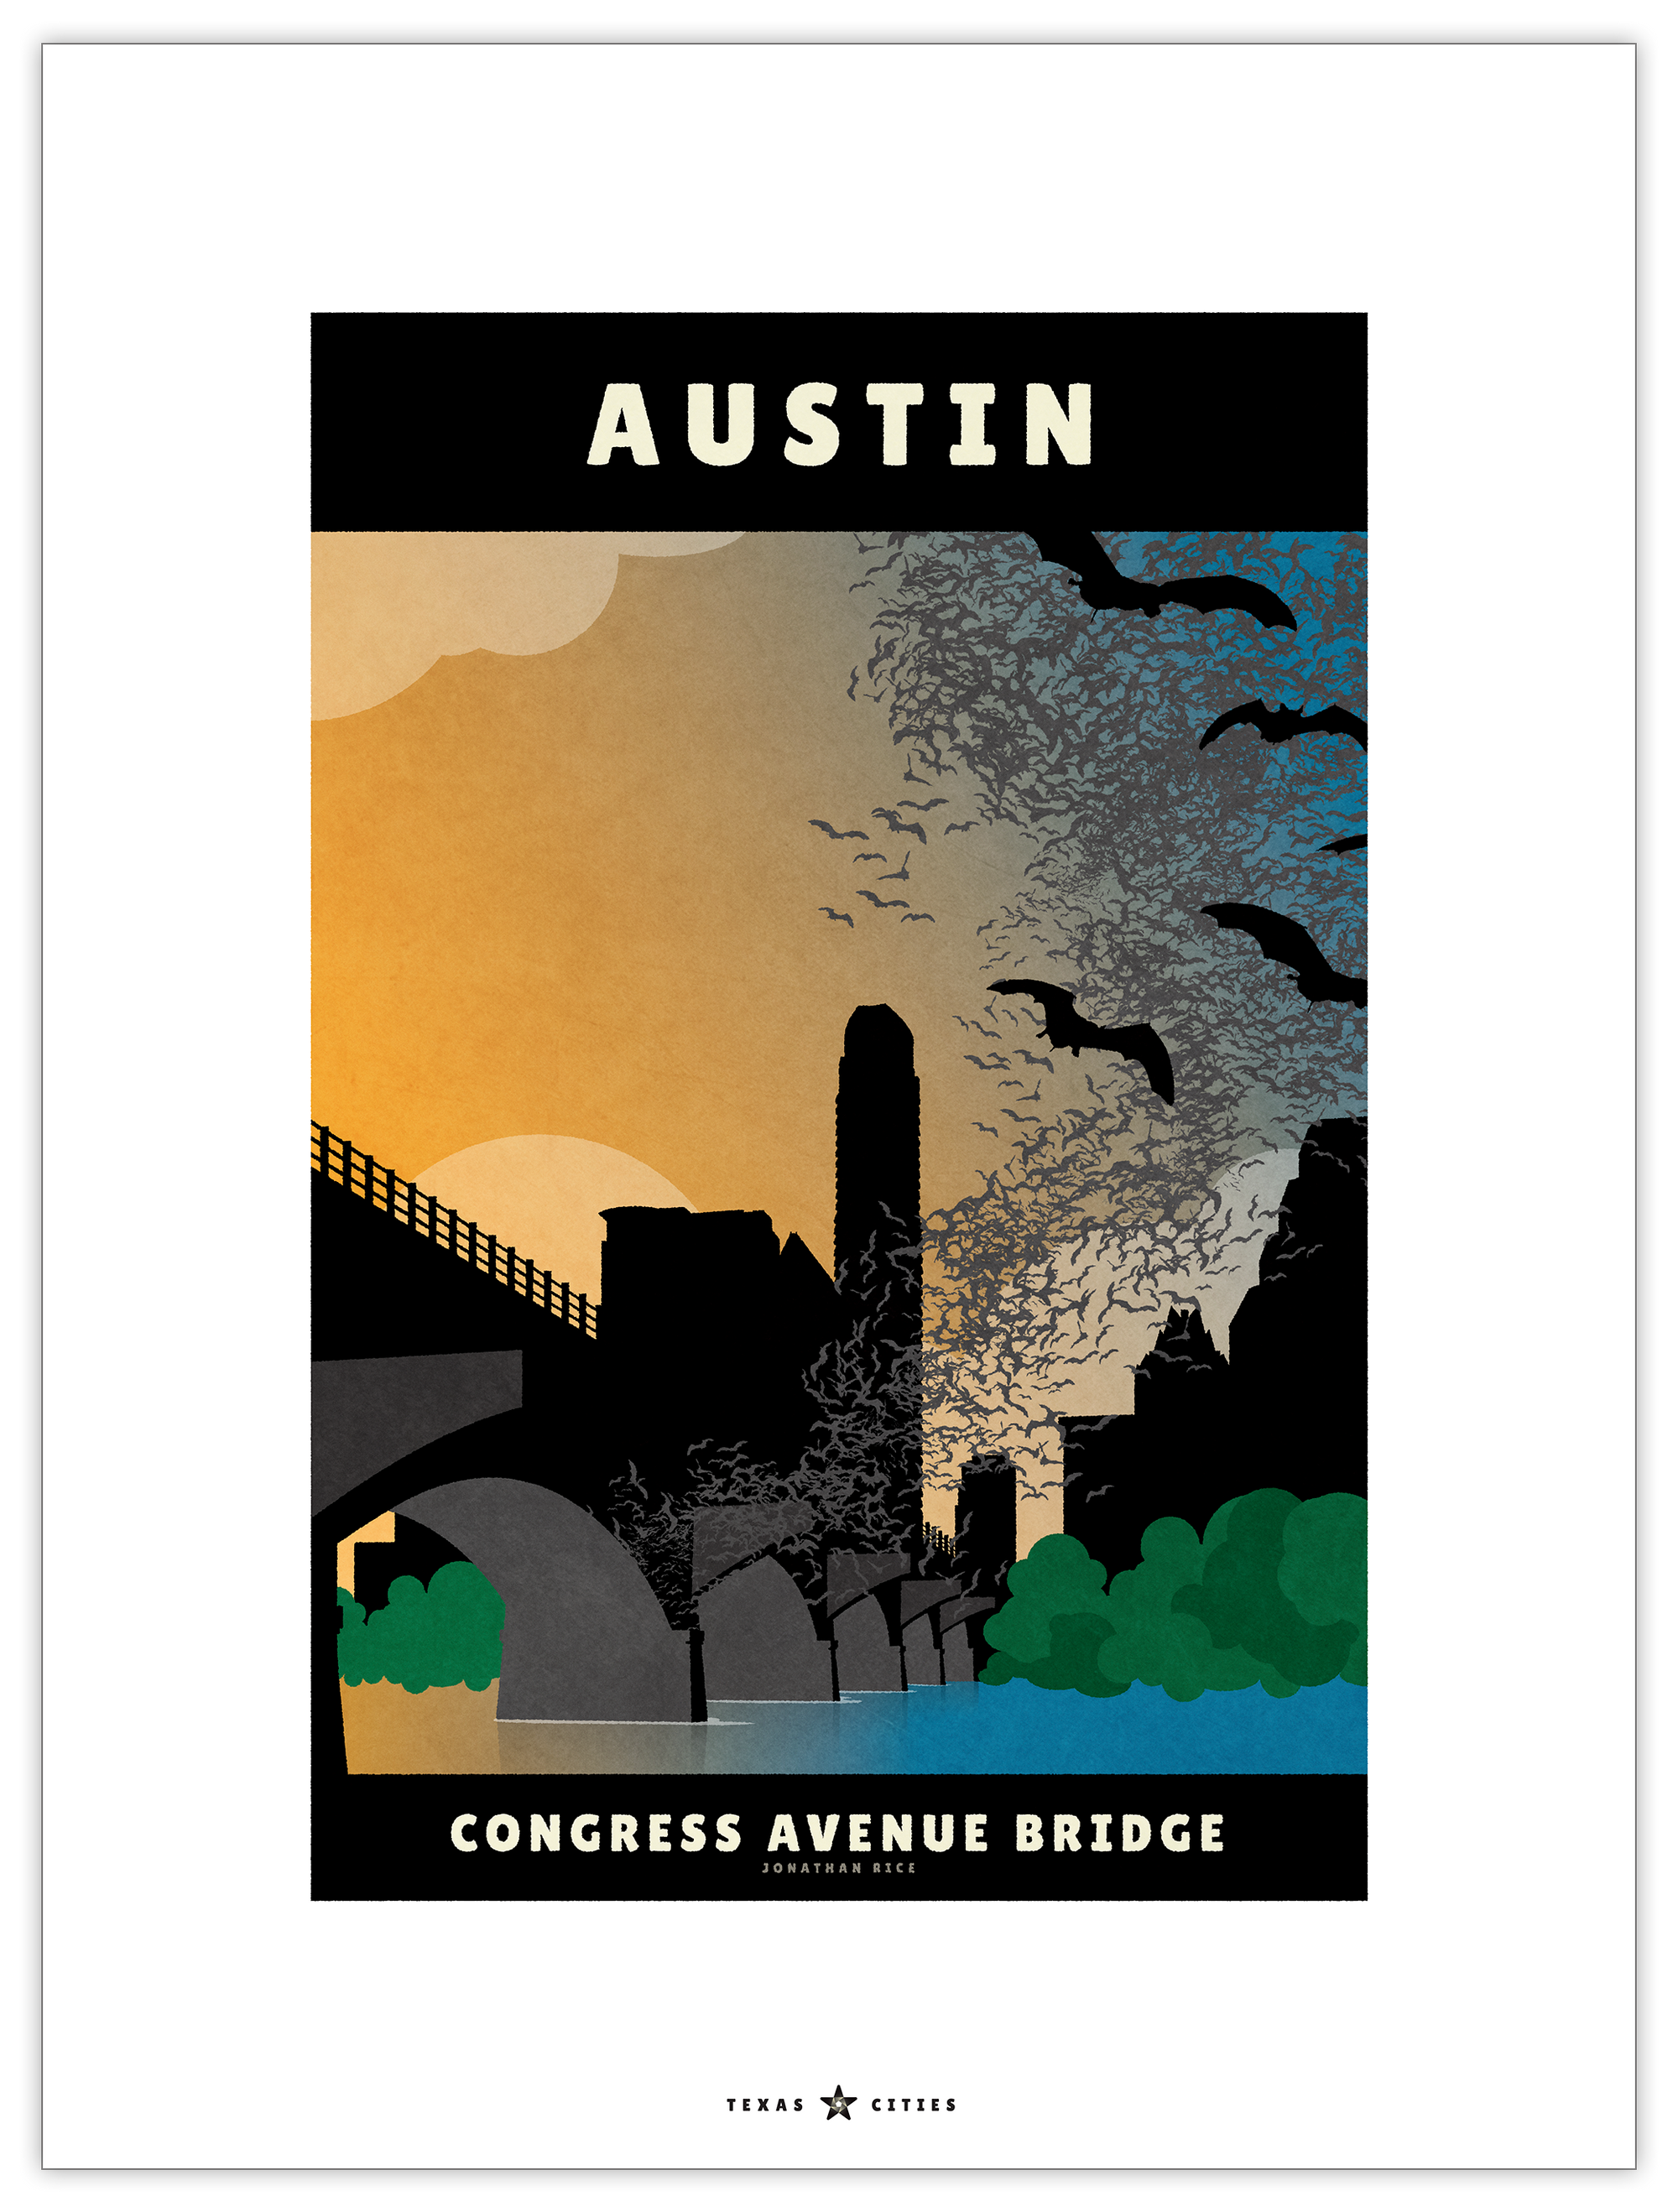 Giclée art print travel poster of Congress Avenue Bridge in Austin, Texas, with bats taking flight at dusk.